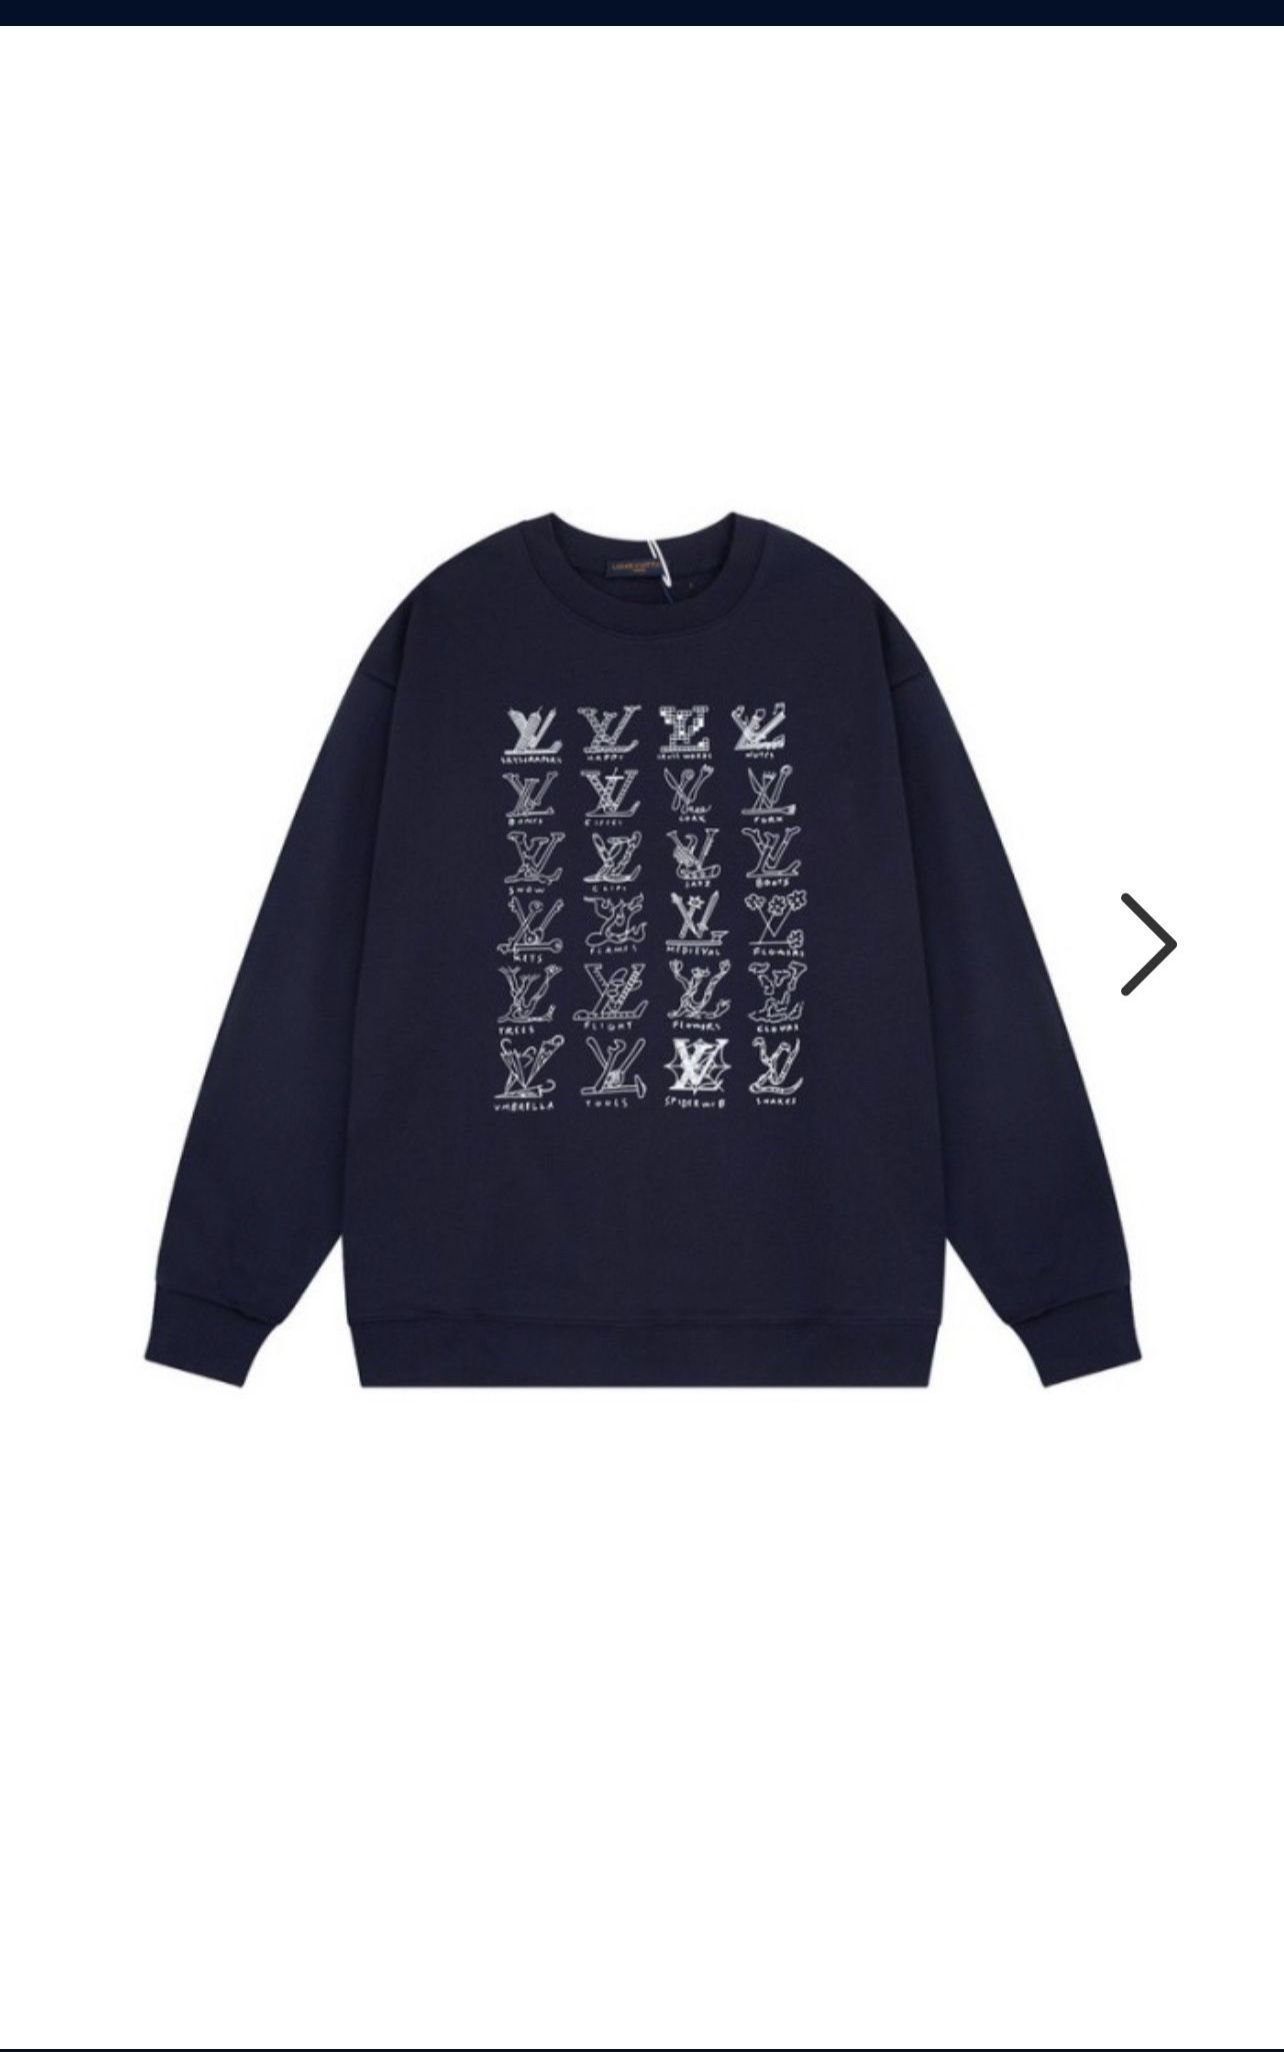 NEW Designer Sweatshirt Size Medium 